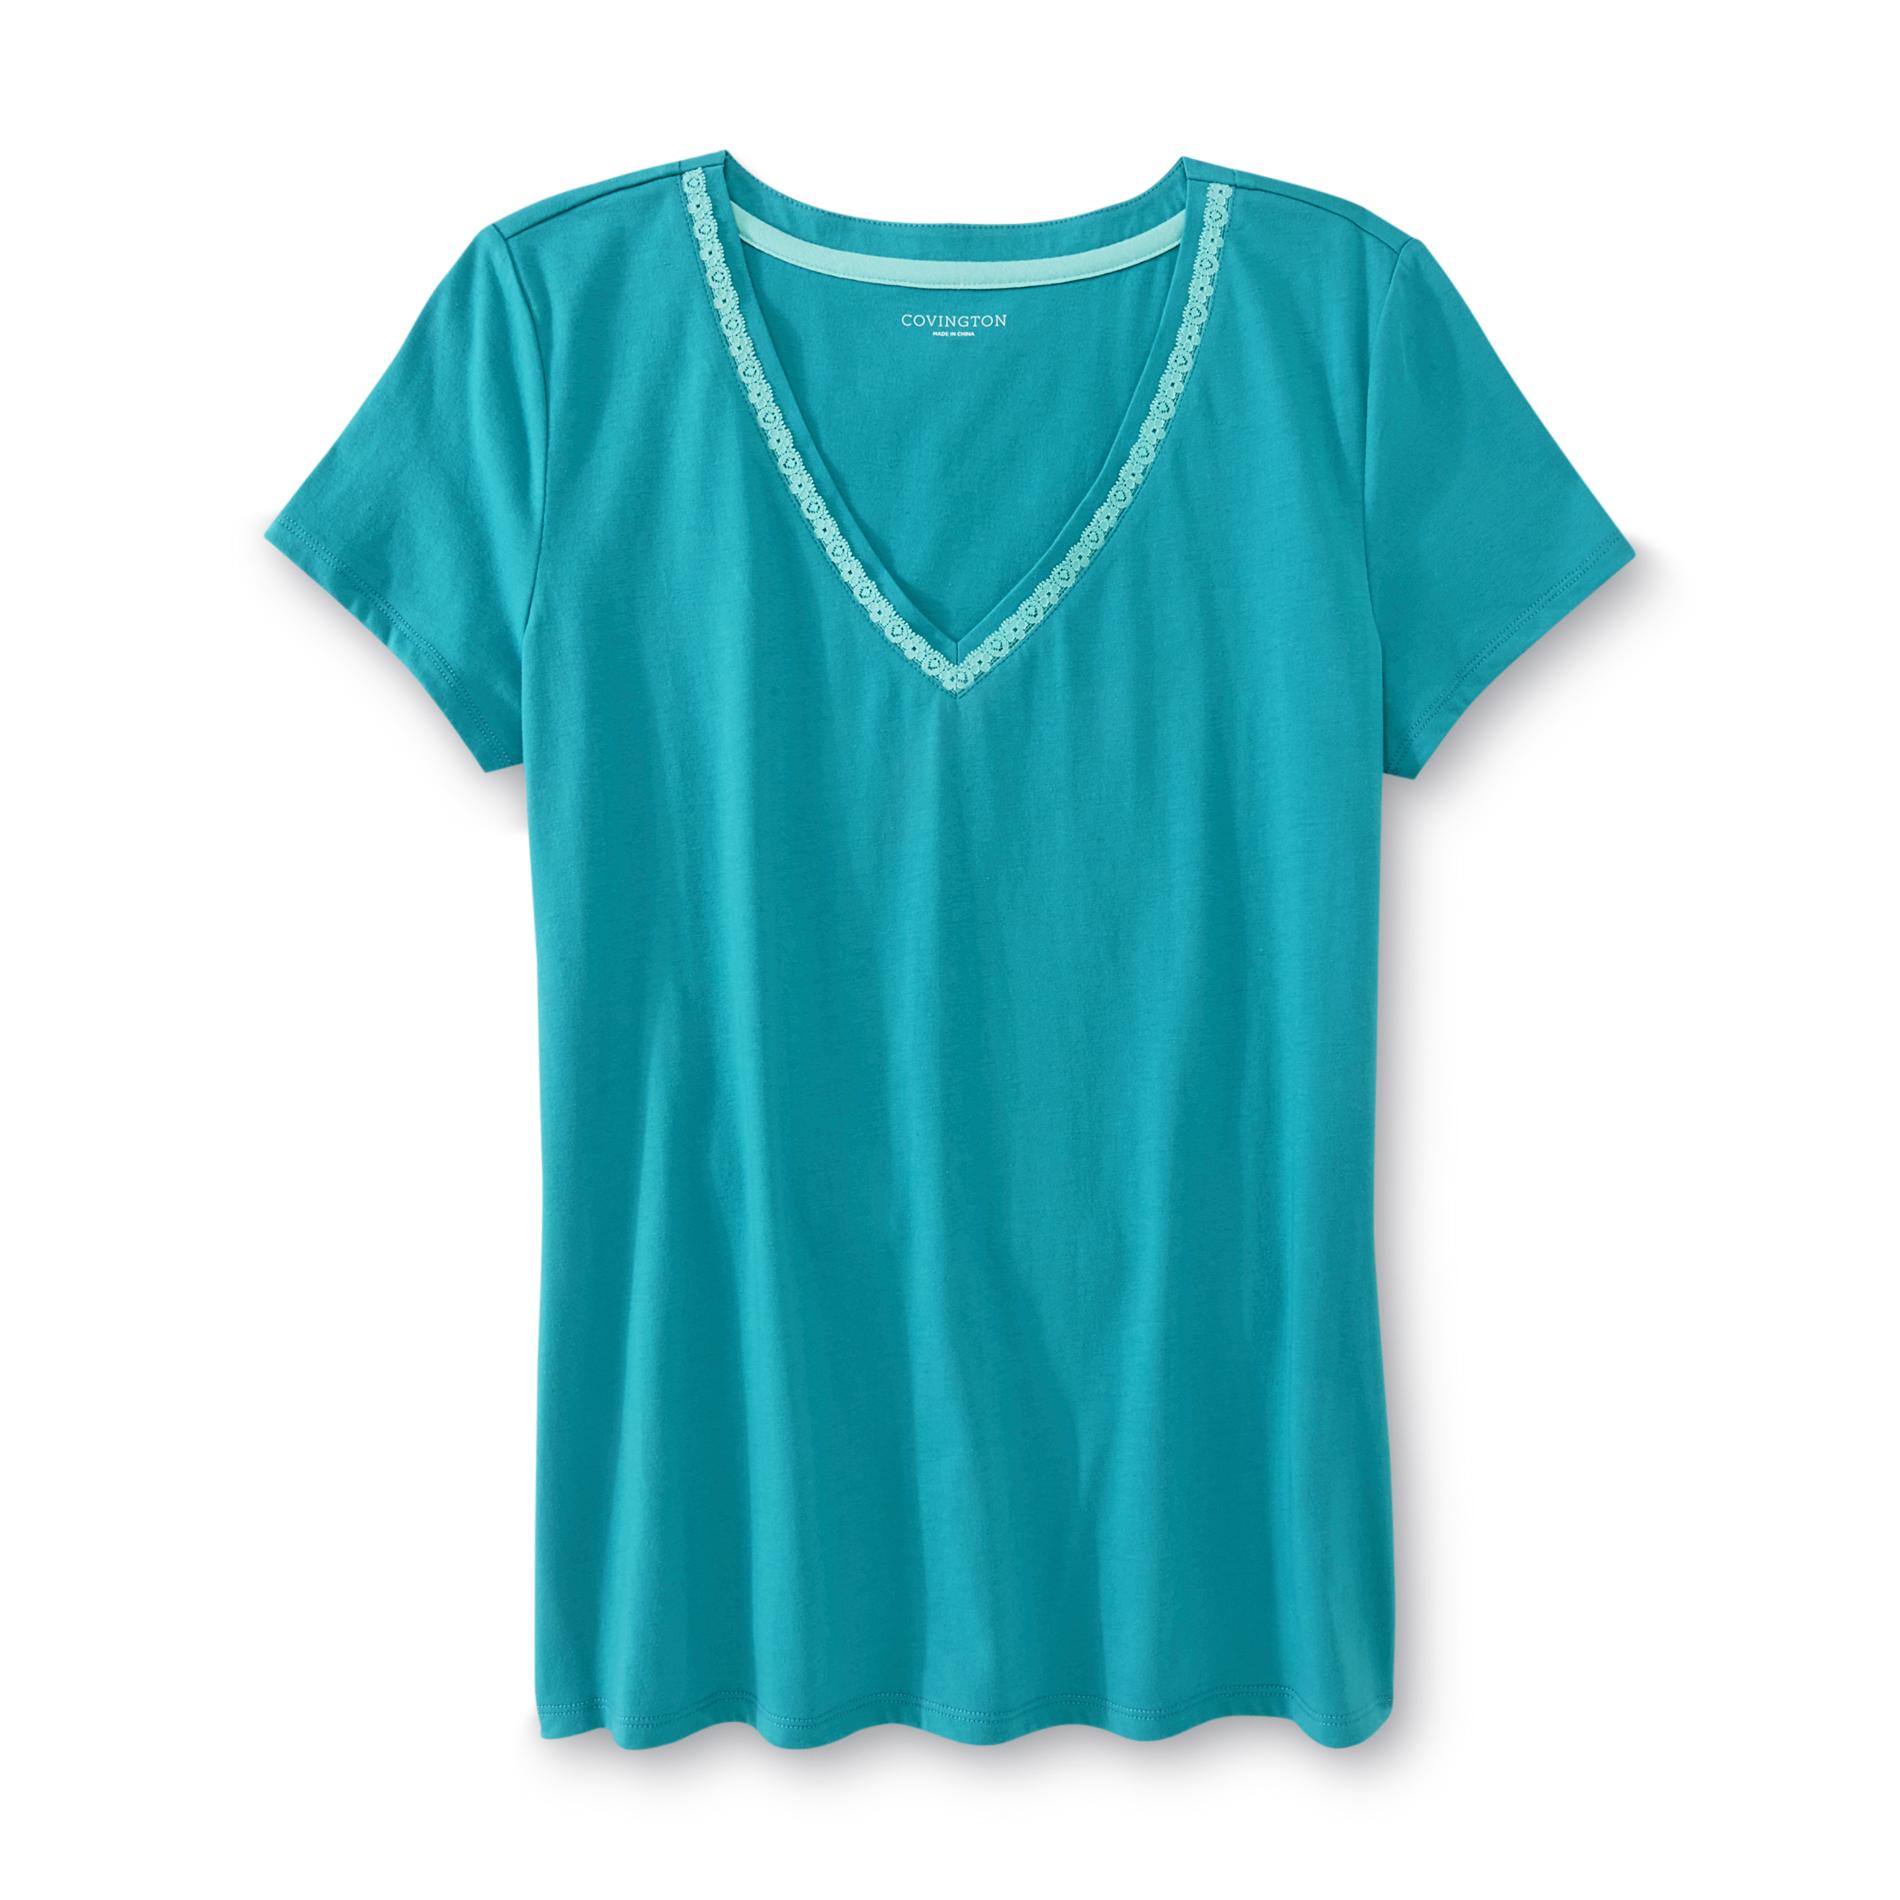 Covington Women's Lace-Trim Sleep T-Shirt